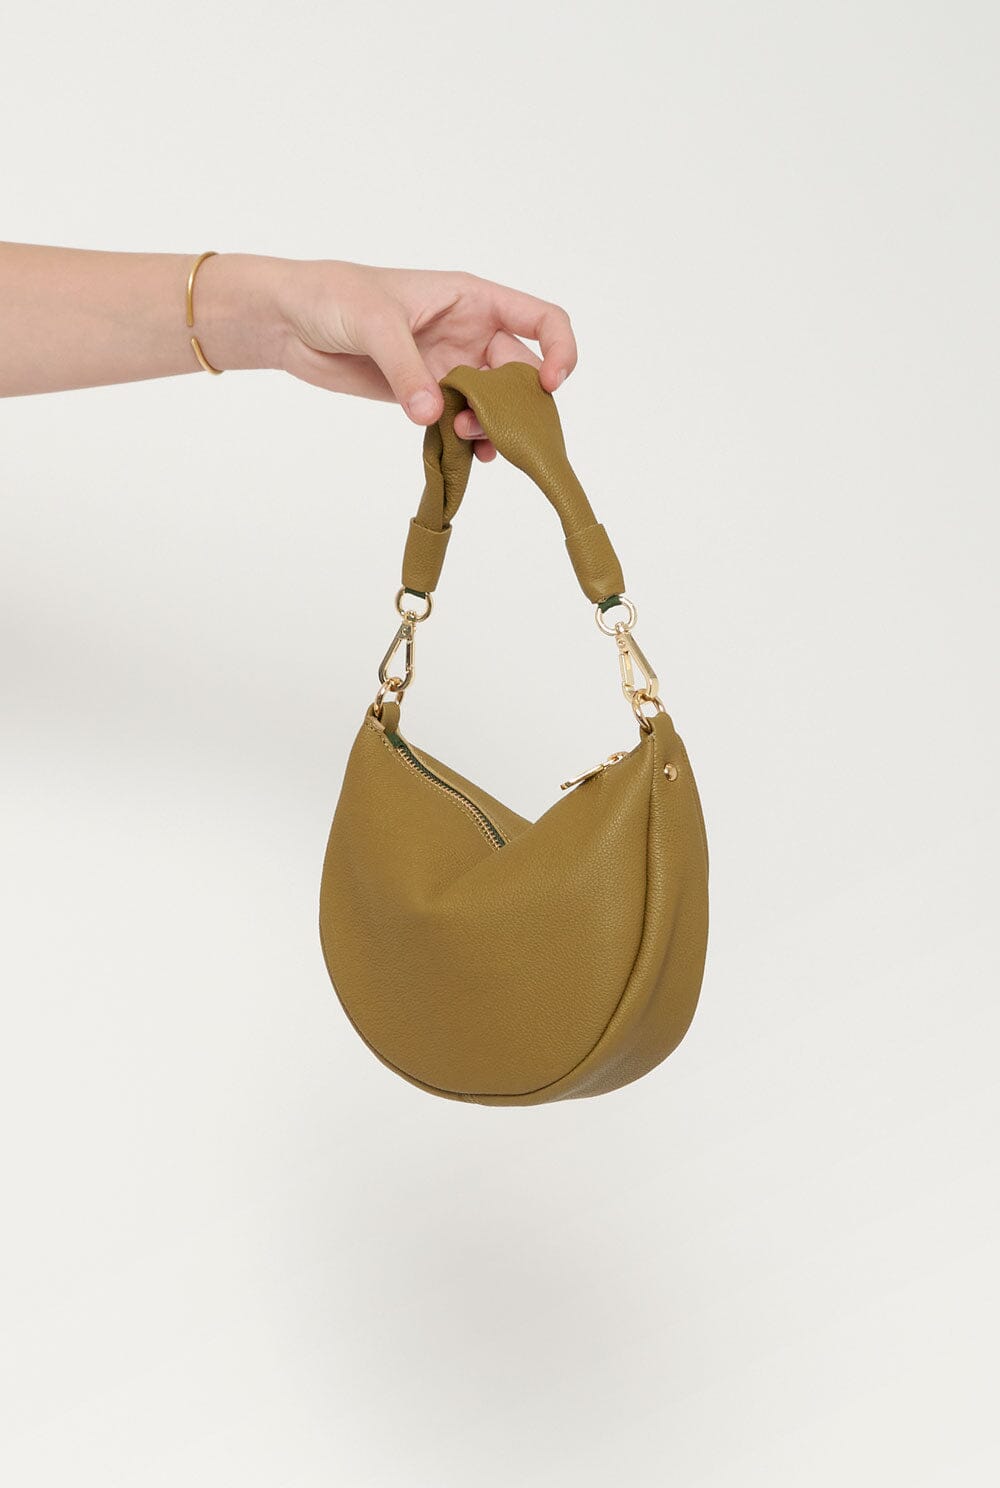 The Baby Gondola Bag oliva Hand bags The Bag Lab 